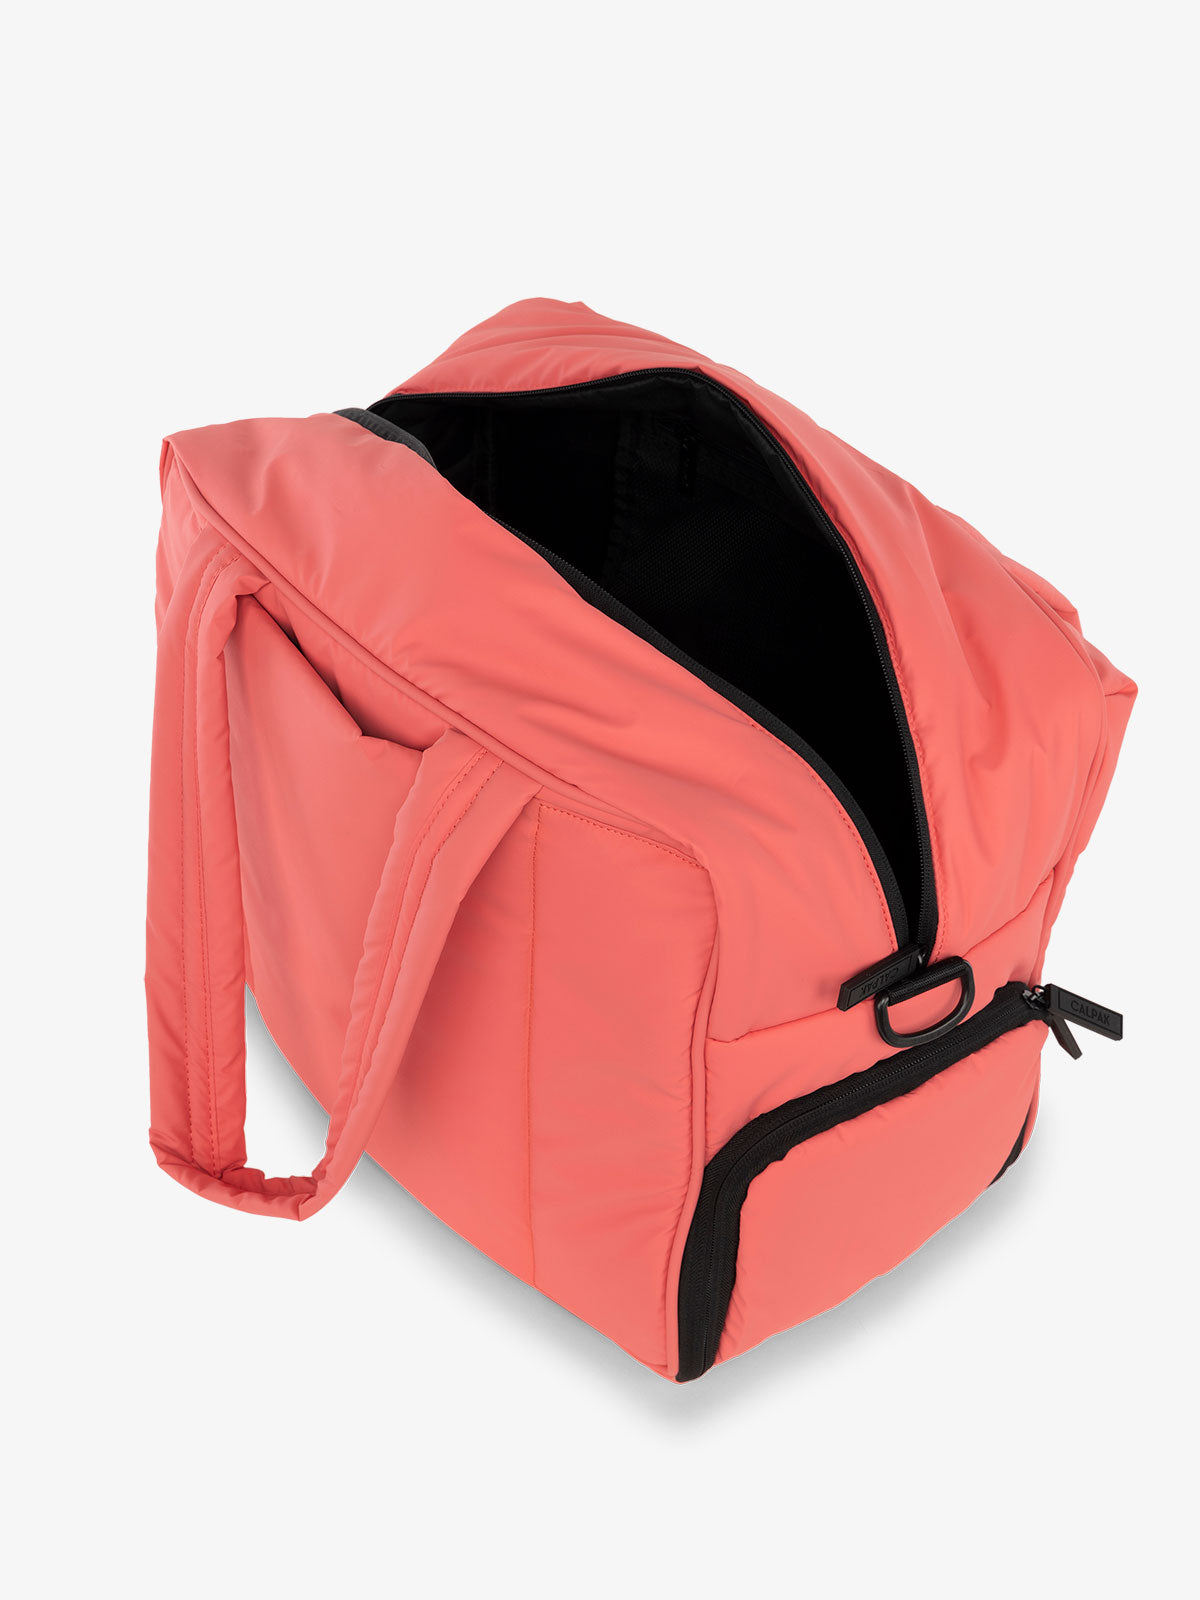 CALPAK Luka puffy Duffel Bag for women in bright pink